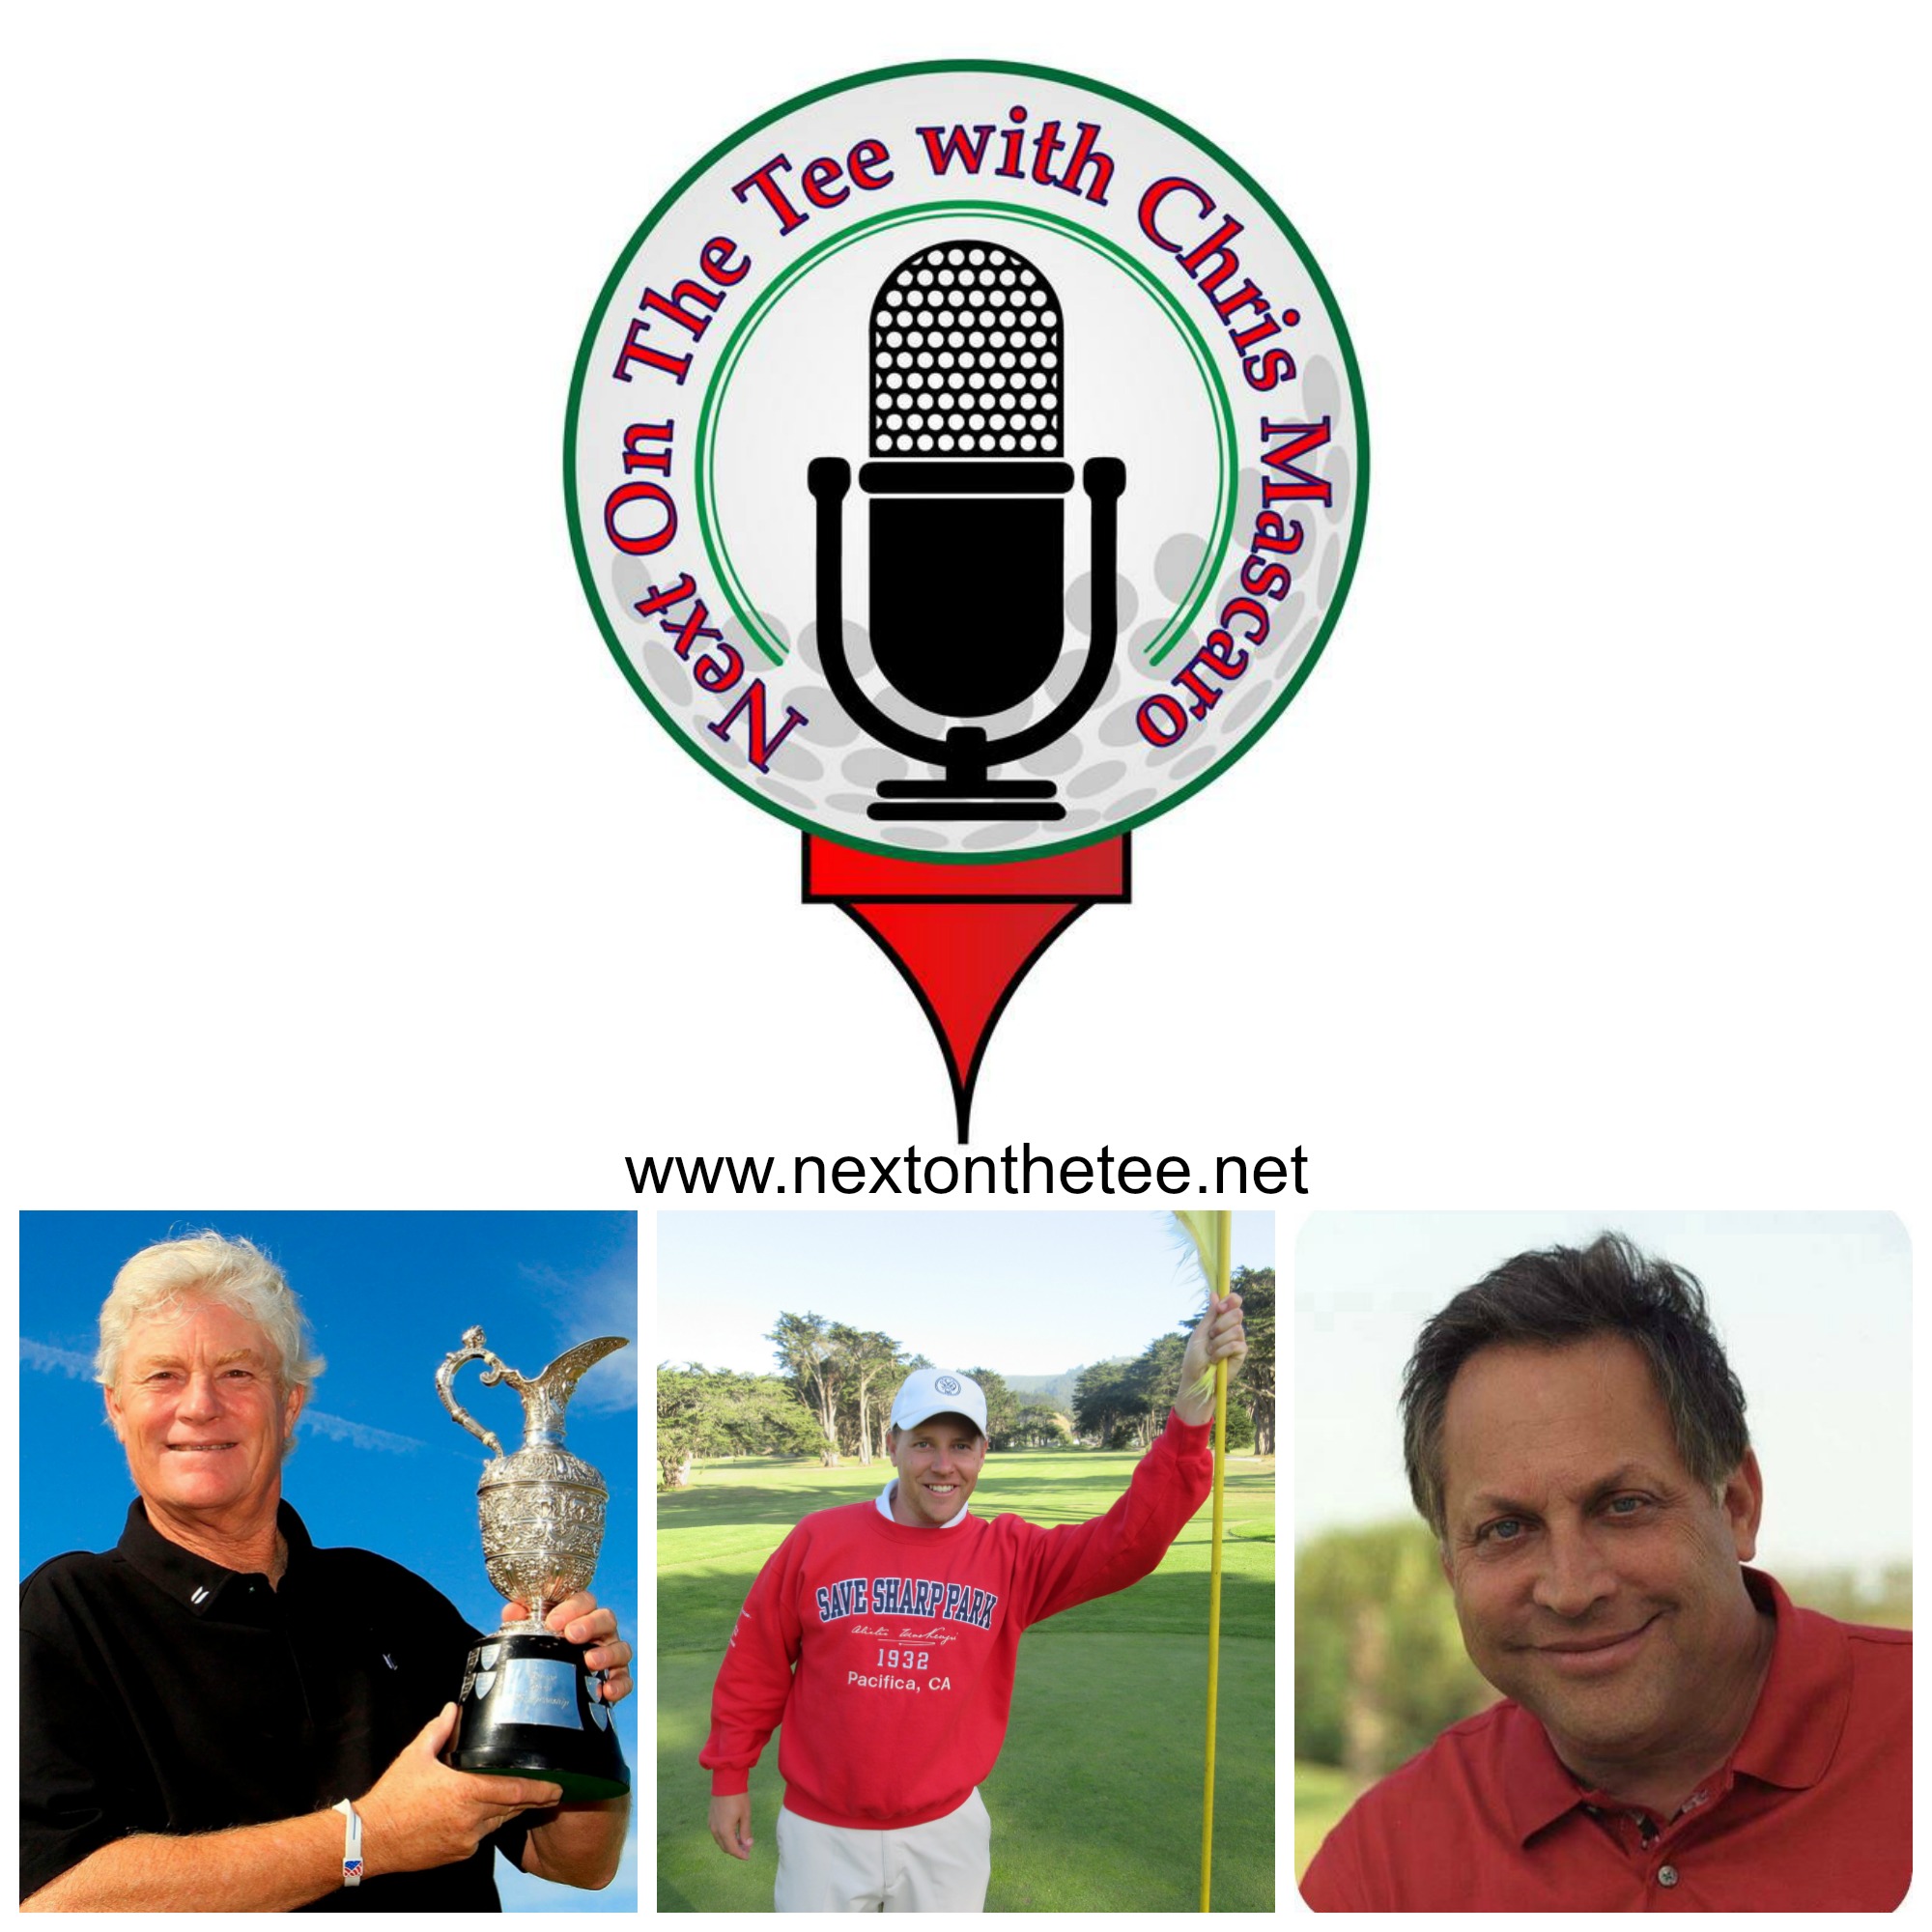 2013 Senior Open Champion Mark Wiebe, Golf Course Architect Jay Blasi, & 